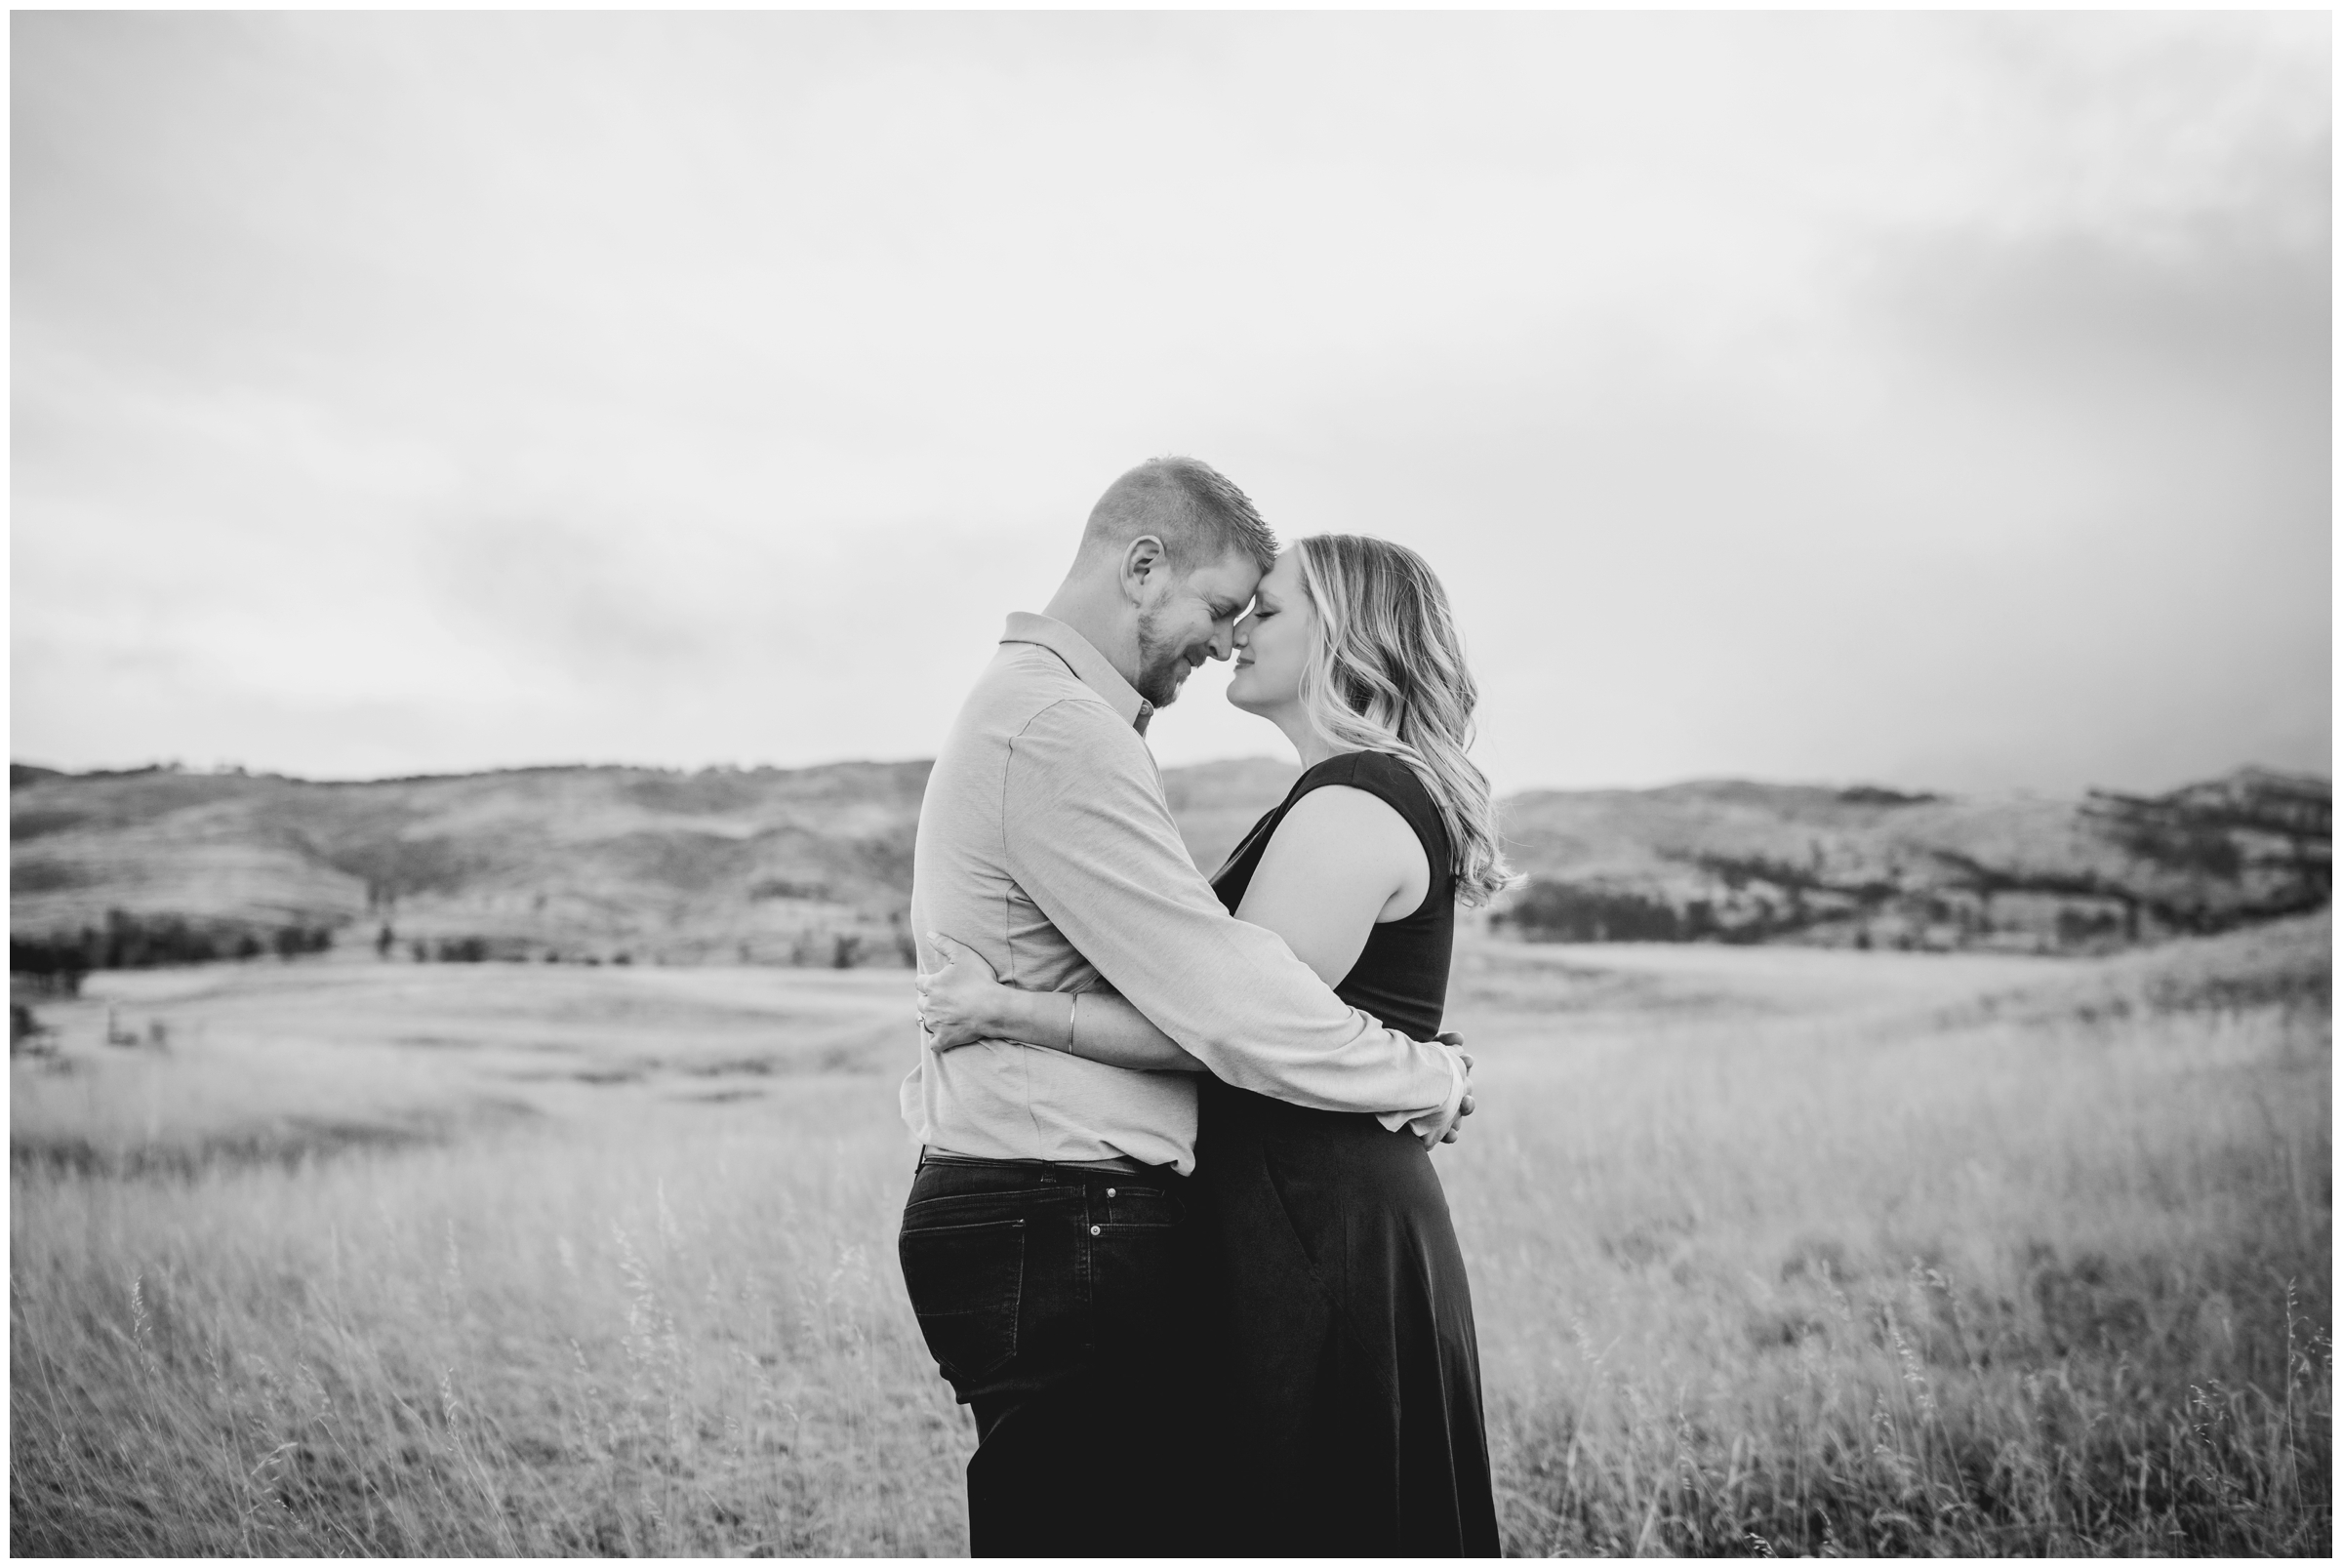 Loveland couples portraits at Bobcat Ridge by Fort Collins wedding photographer Plum Pretty Photography